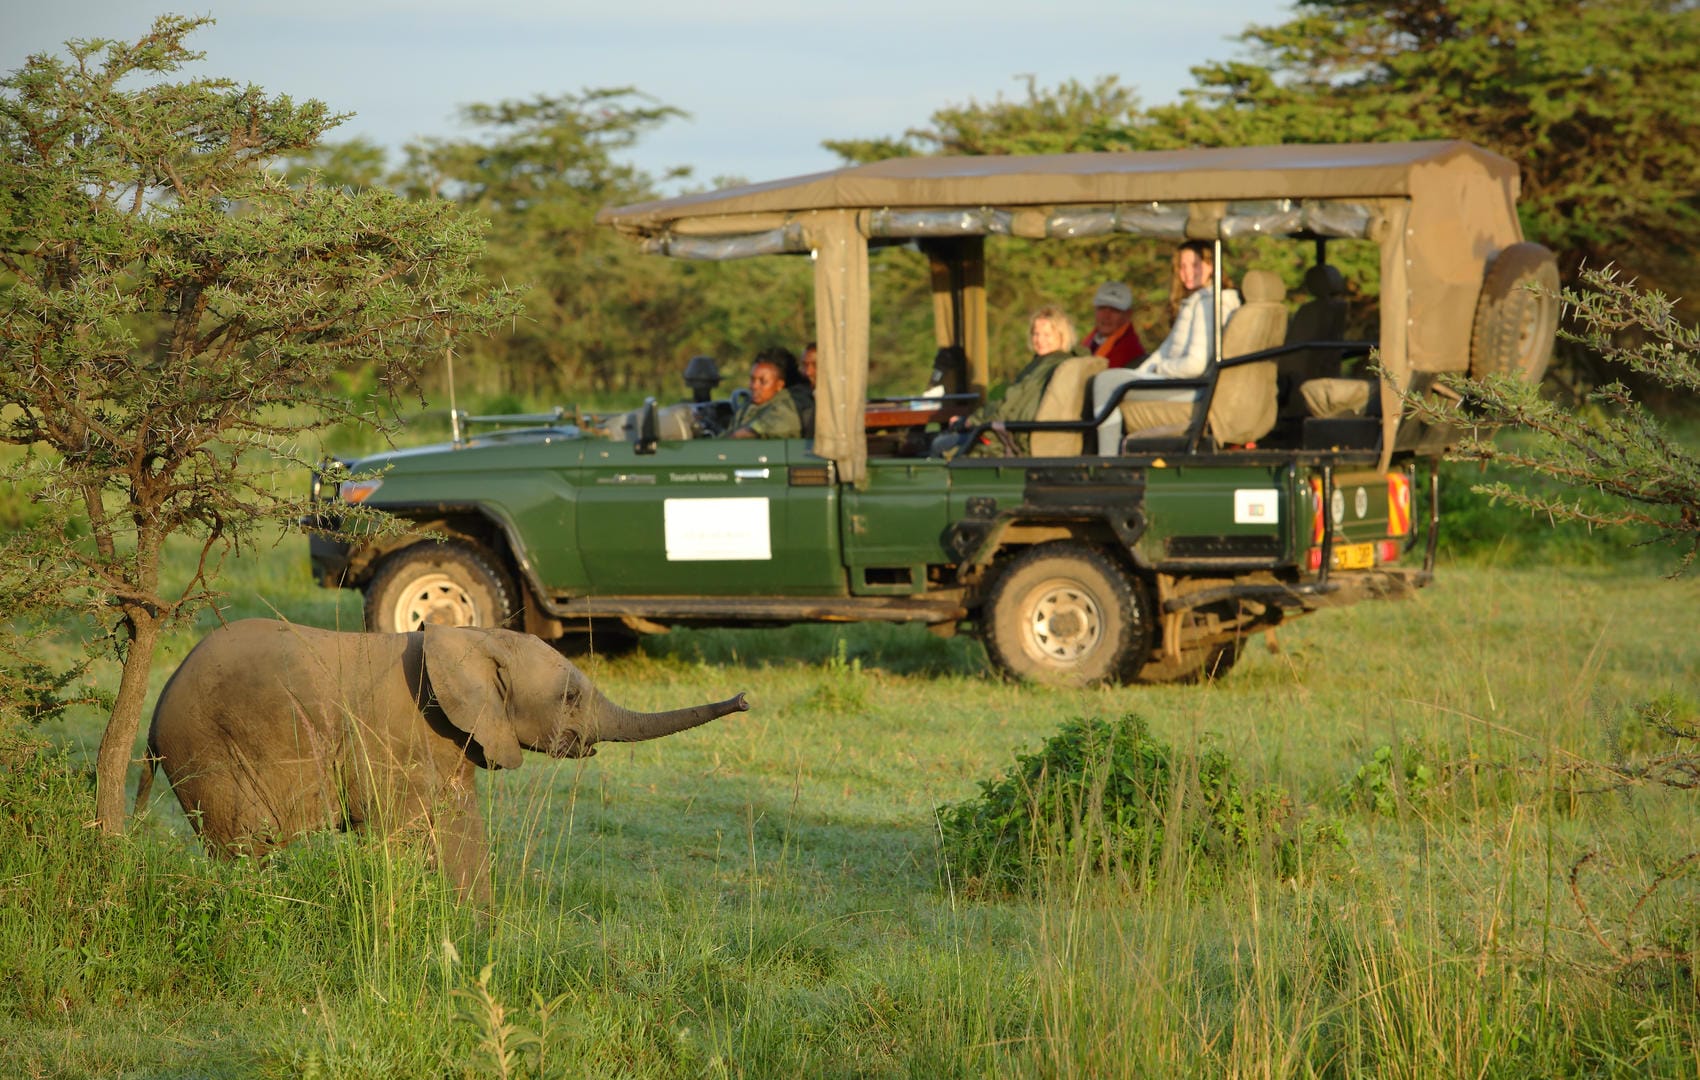 safe safari animals